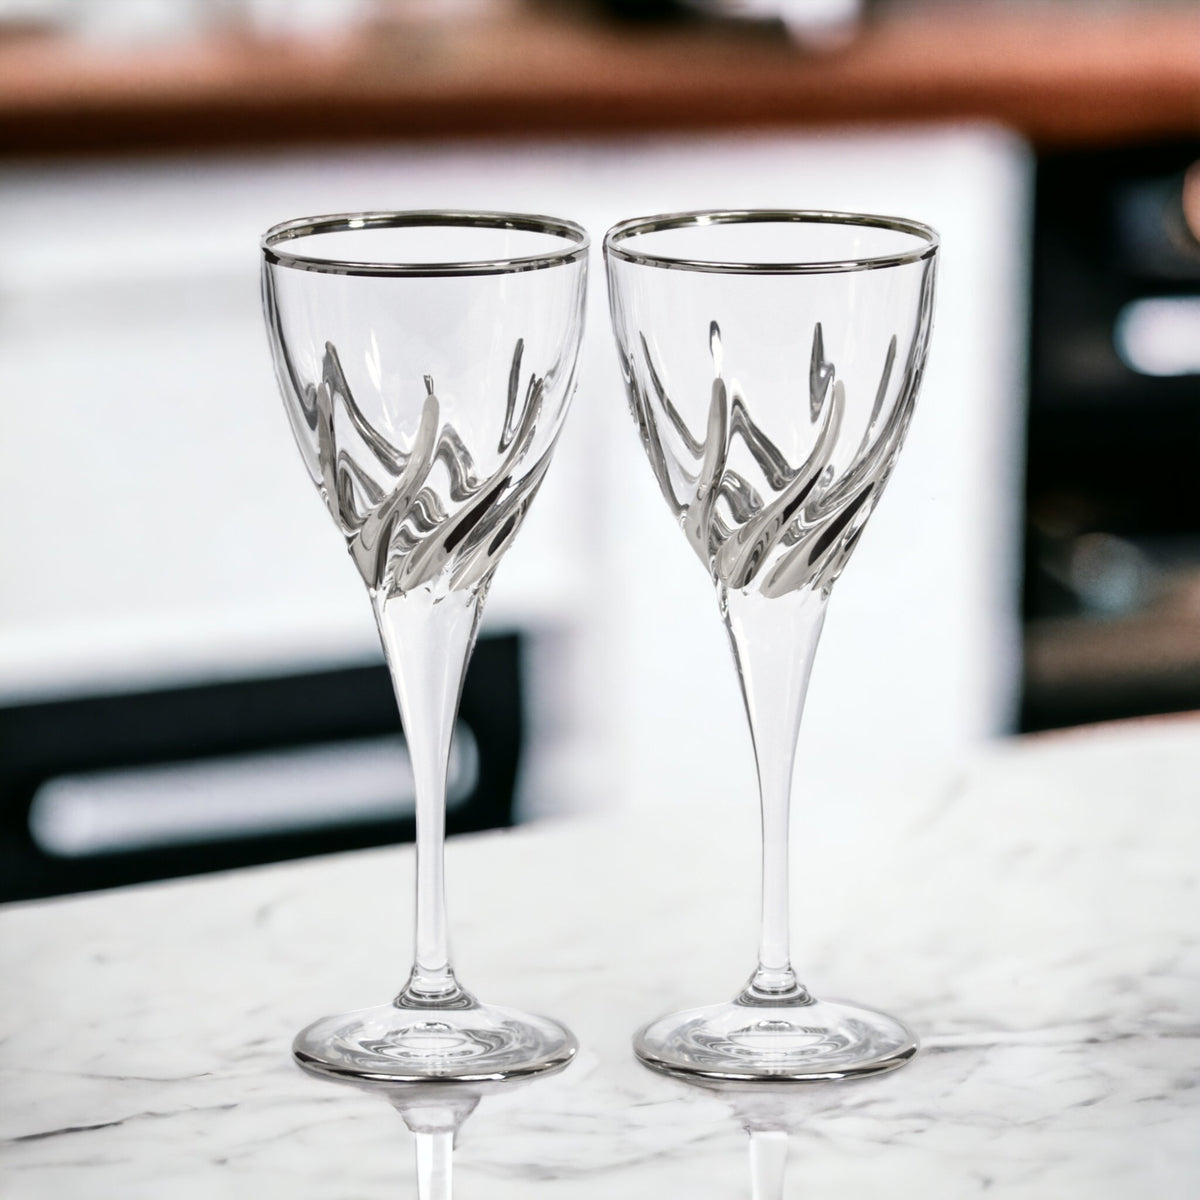 Trix Wine Glasses, Set of 2, Platinum, Made in Italy - My Italian Decor